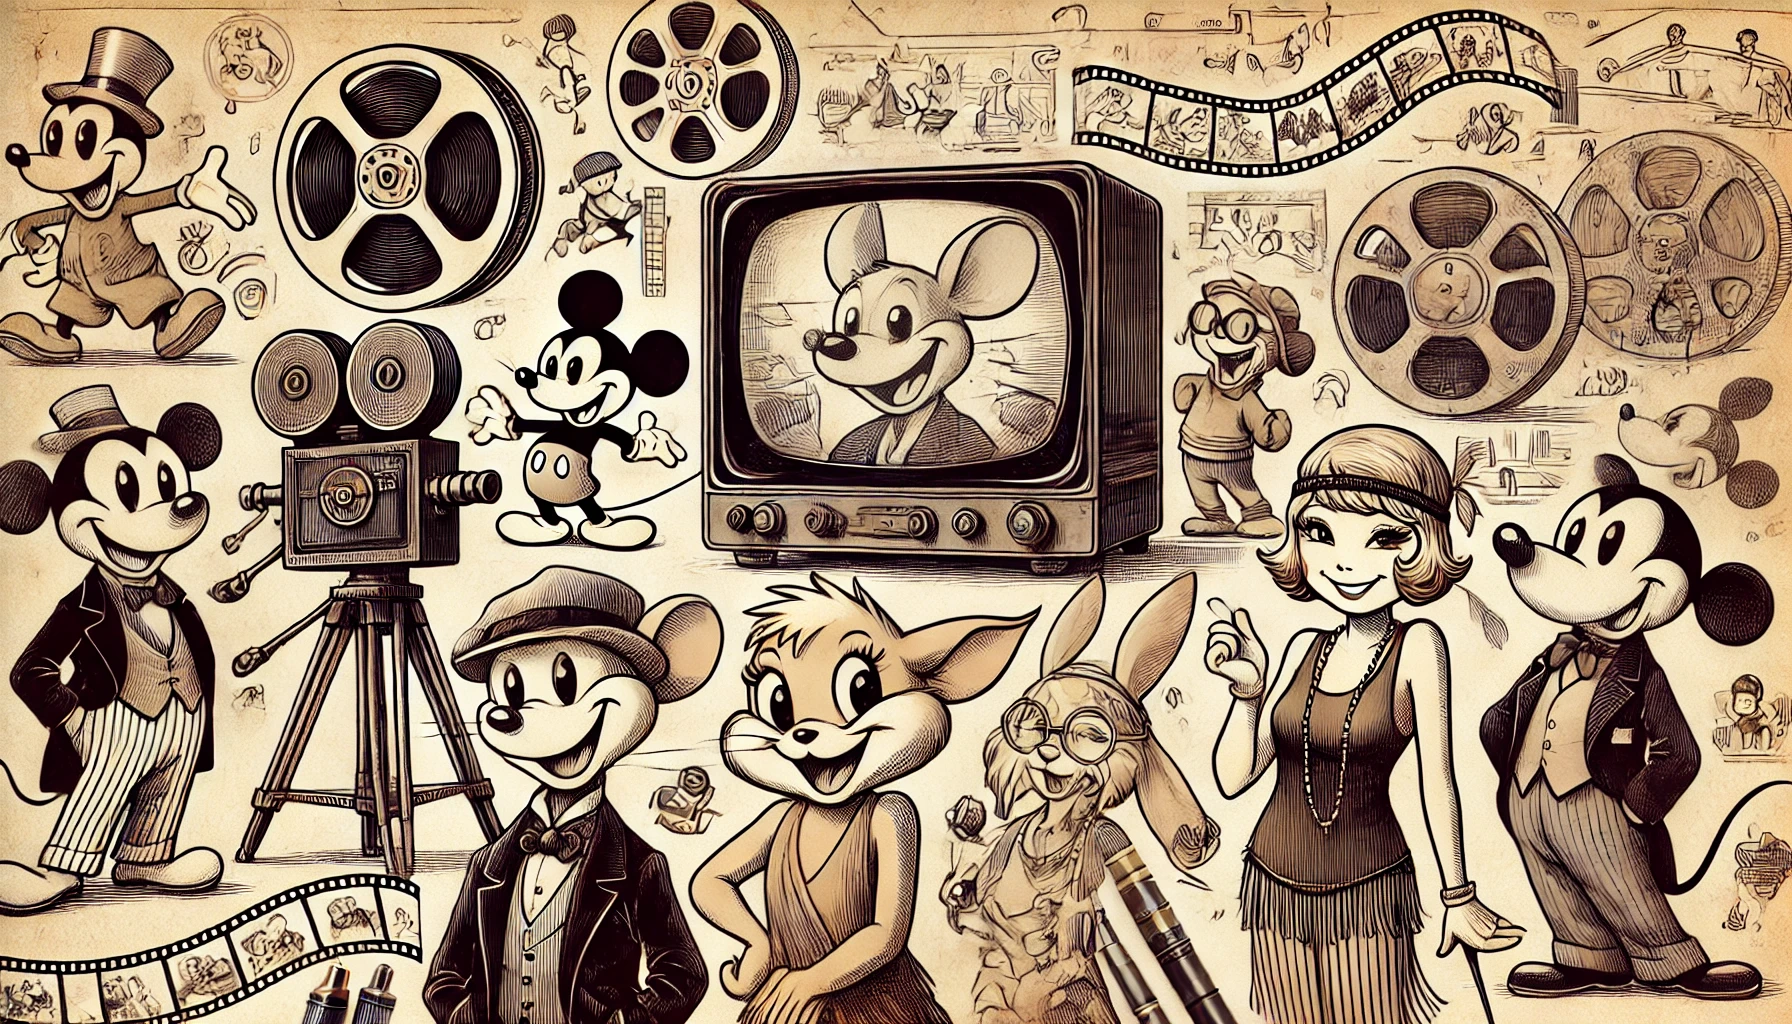 Rediscovering Old Cartoons: A Nostalgic Journey Through Animation History